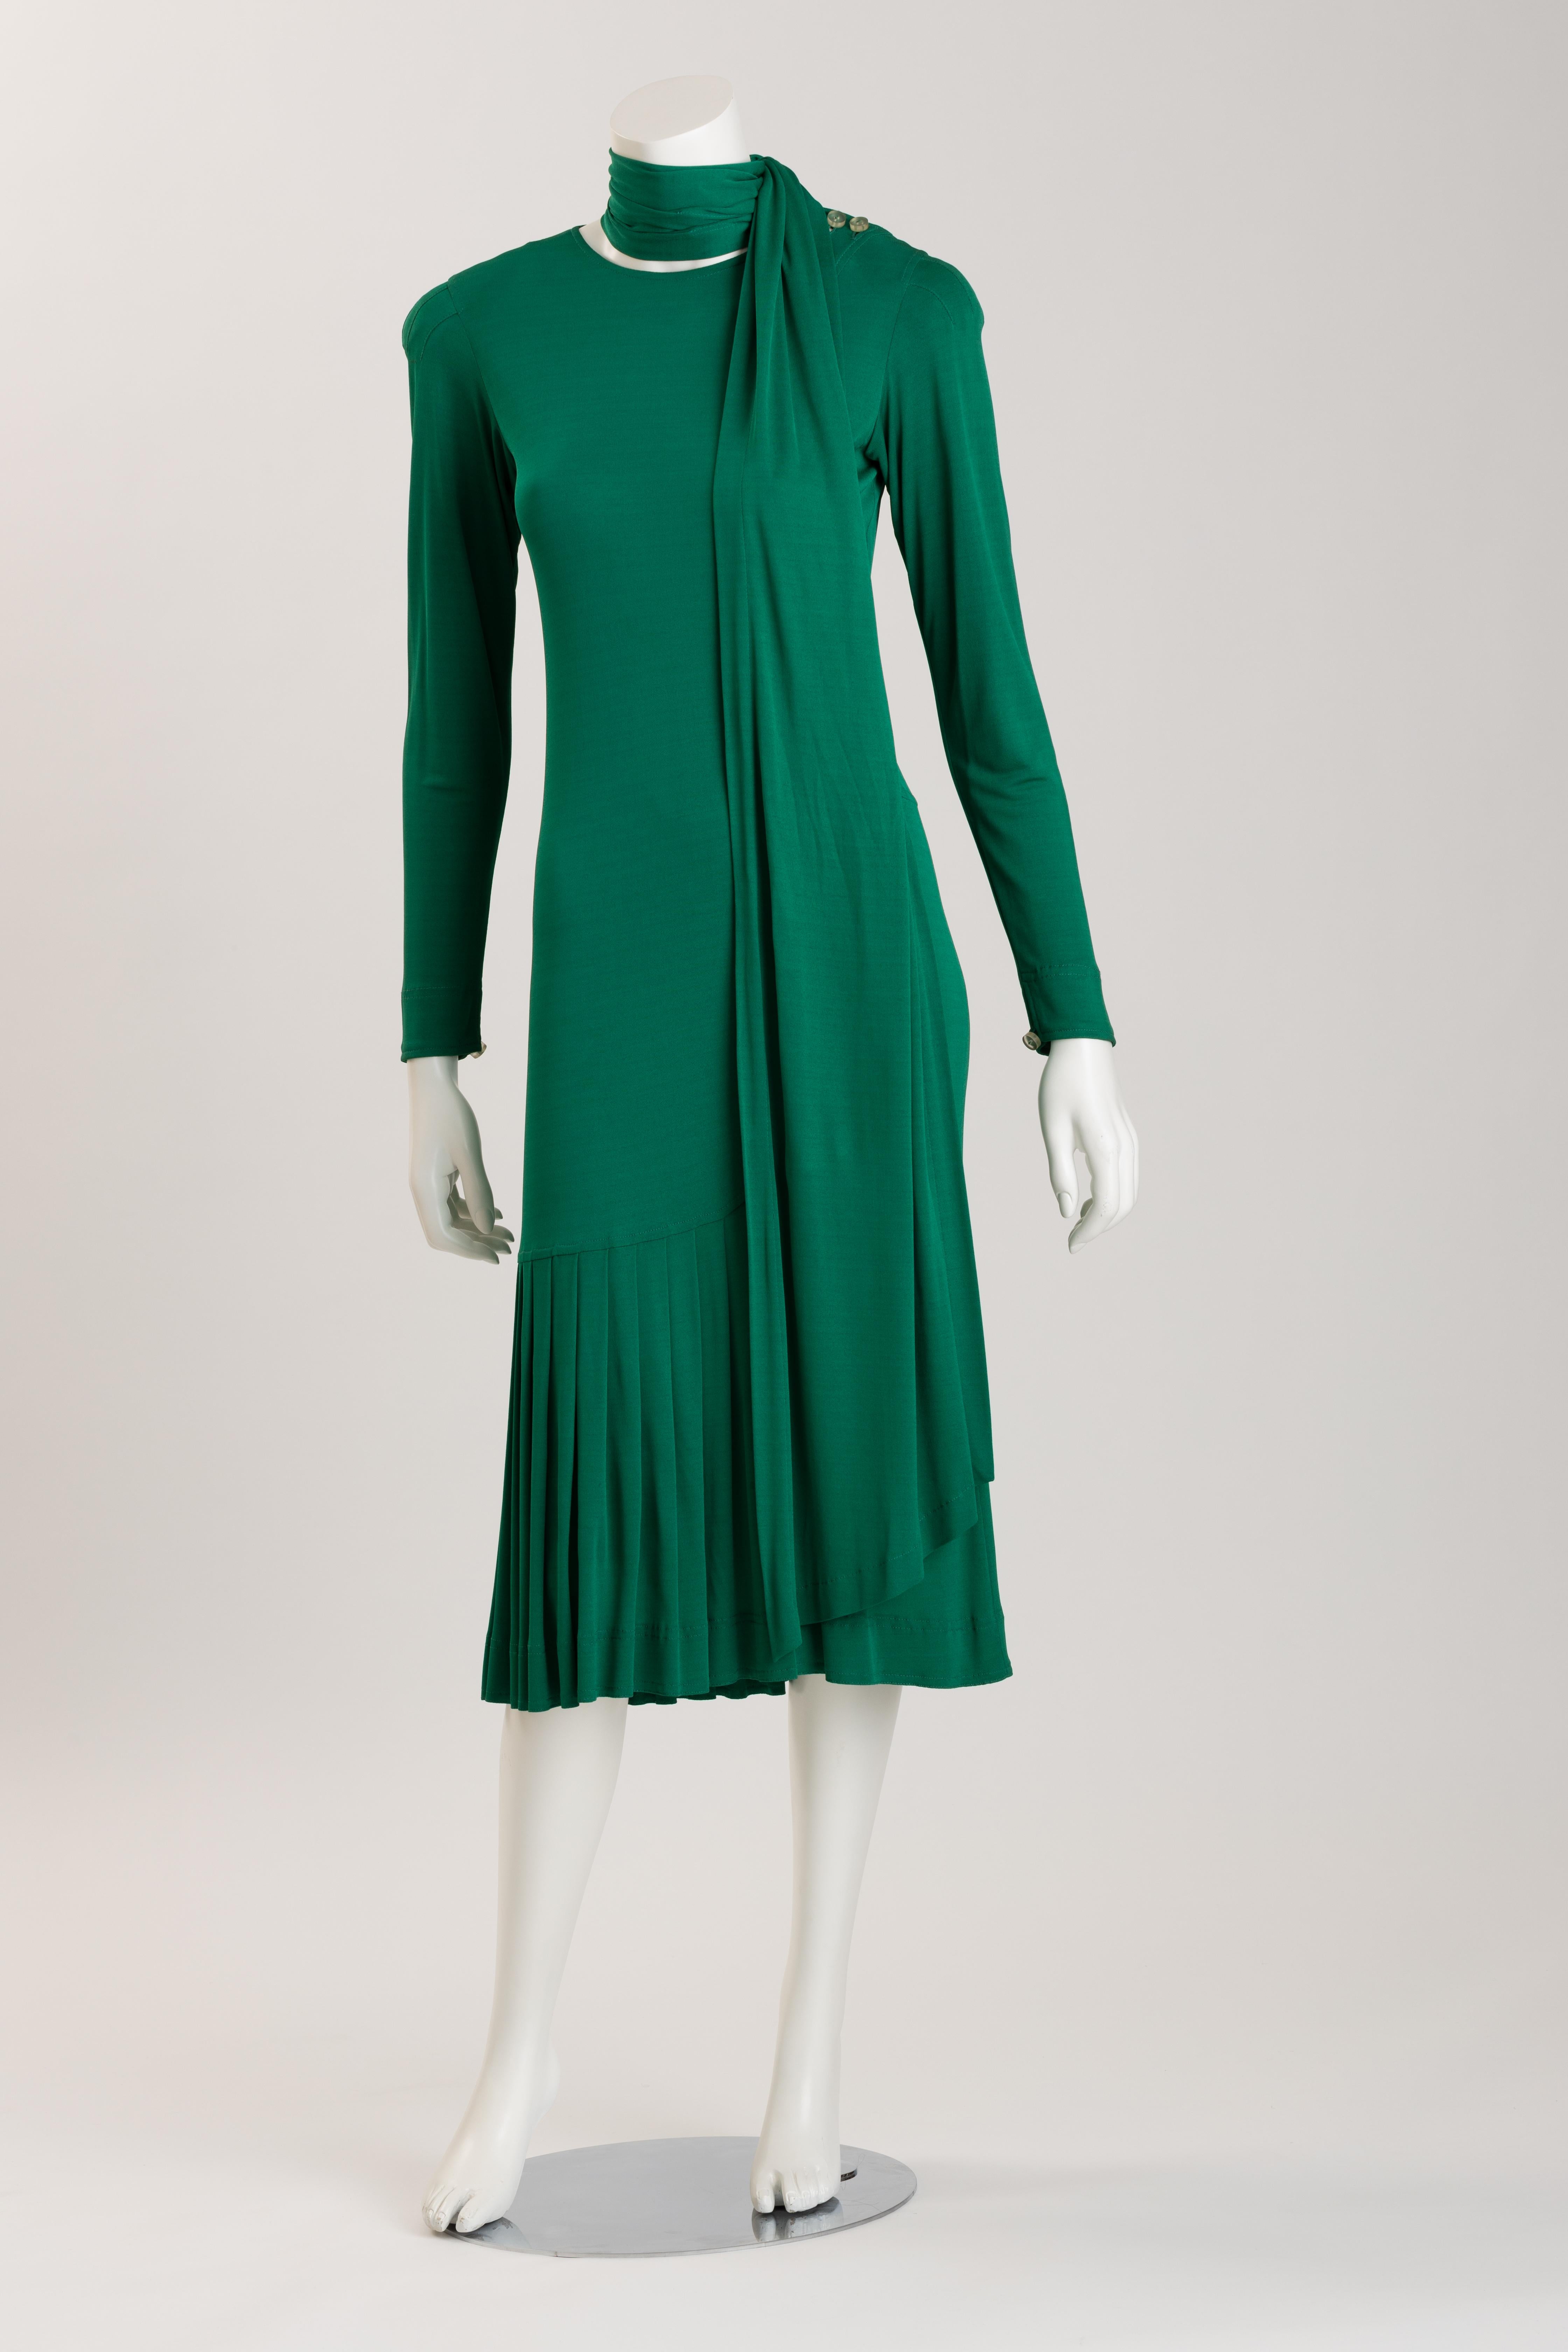 Jean Muir - Robe de cocktail en jersey de viscose vert émeraude Pour femmes en vente